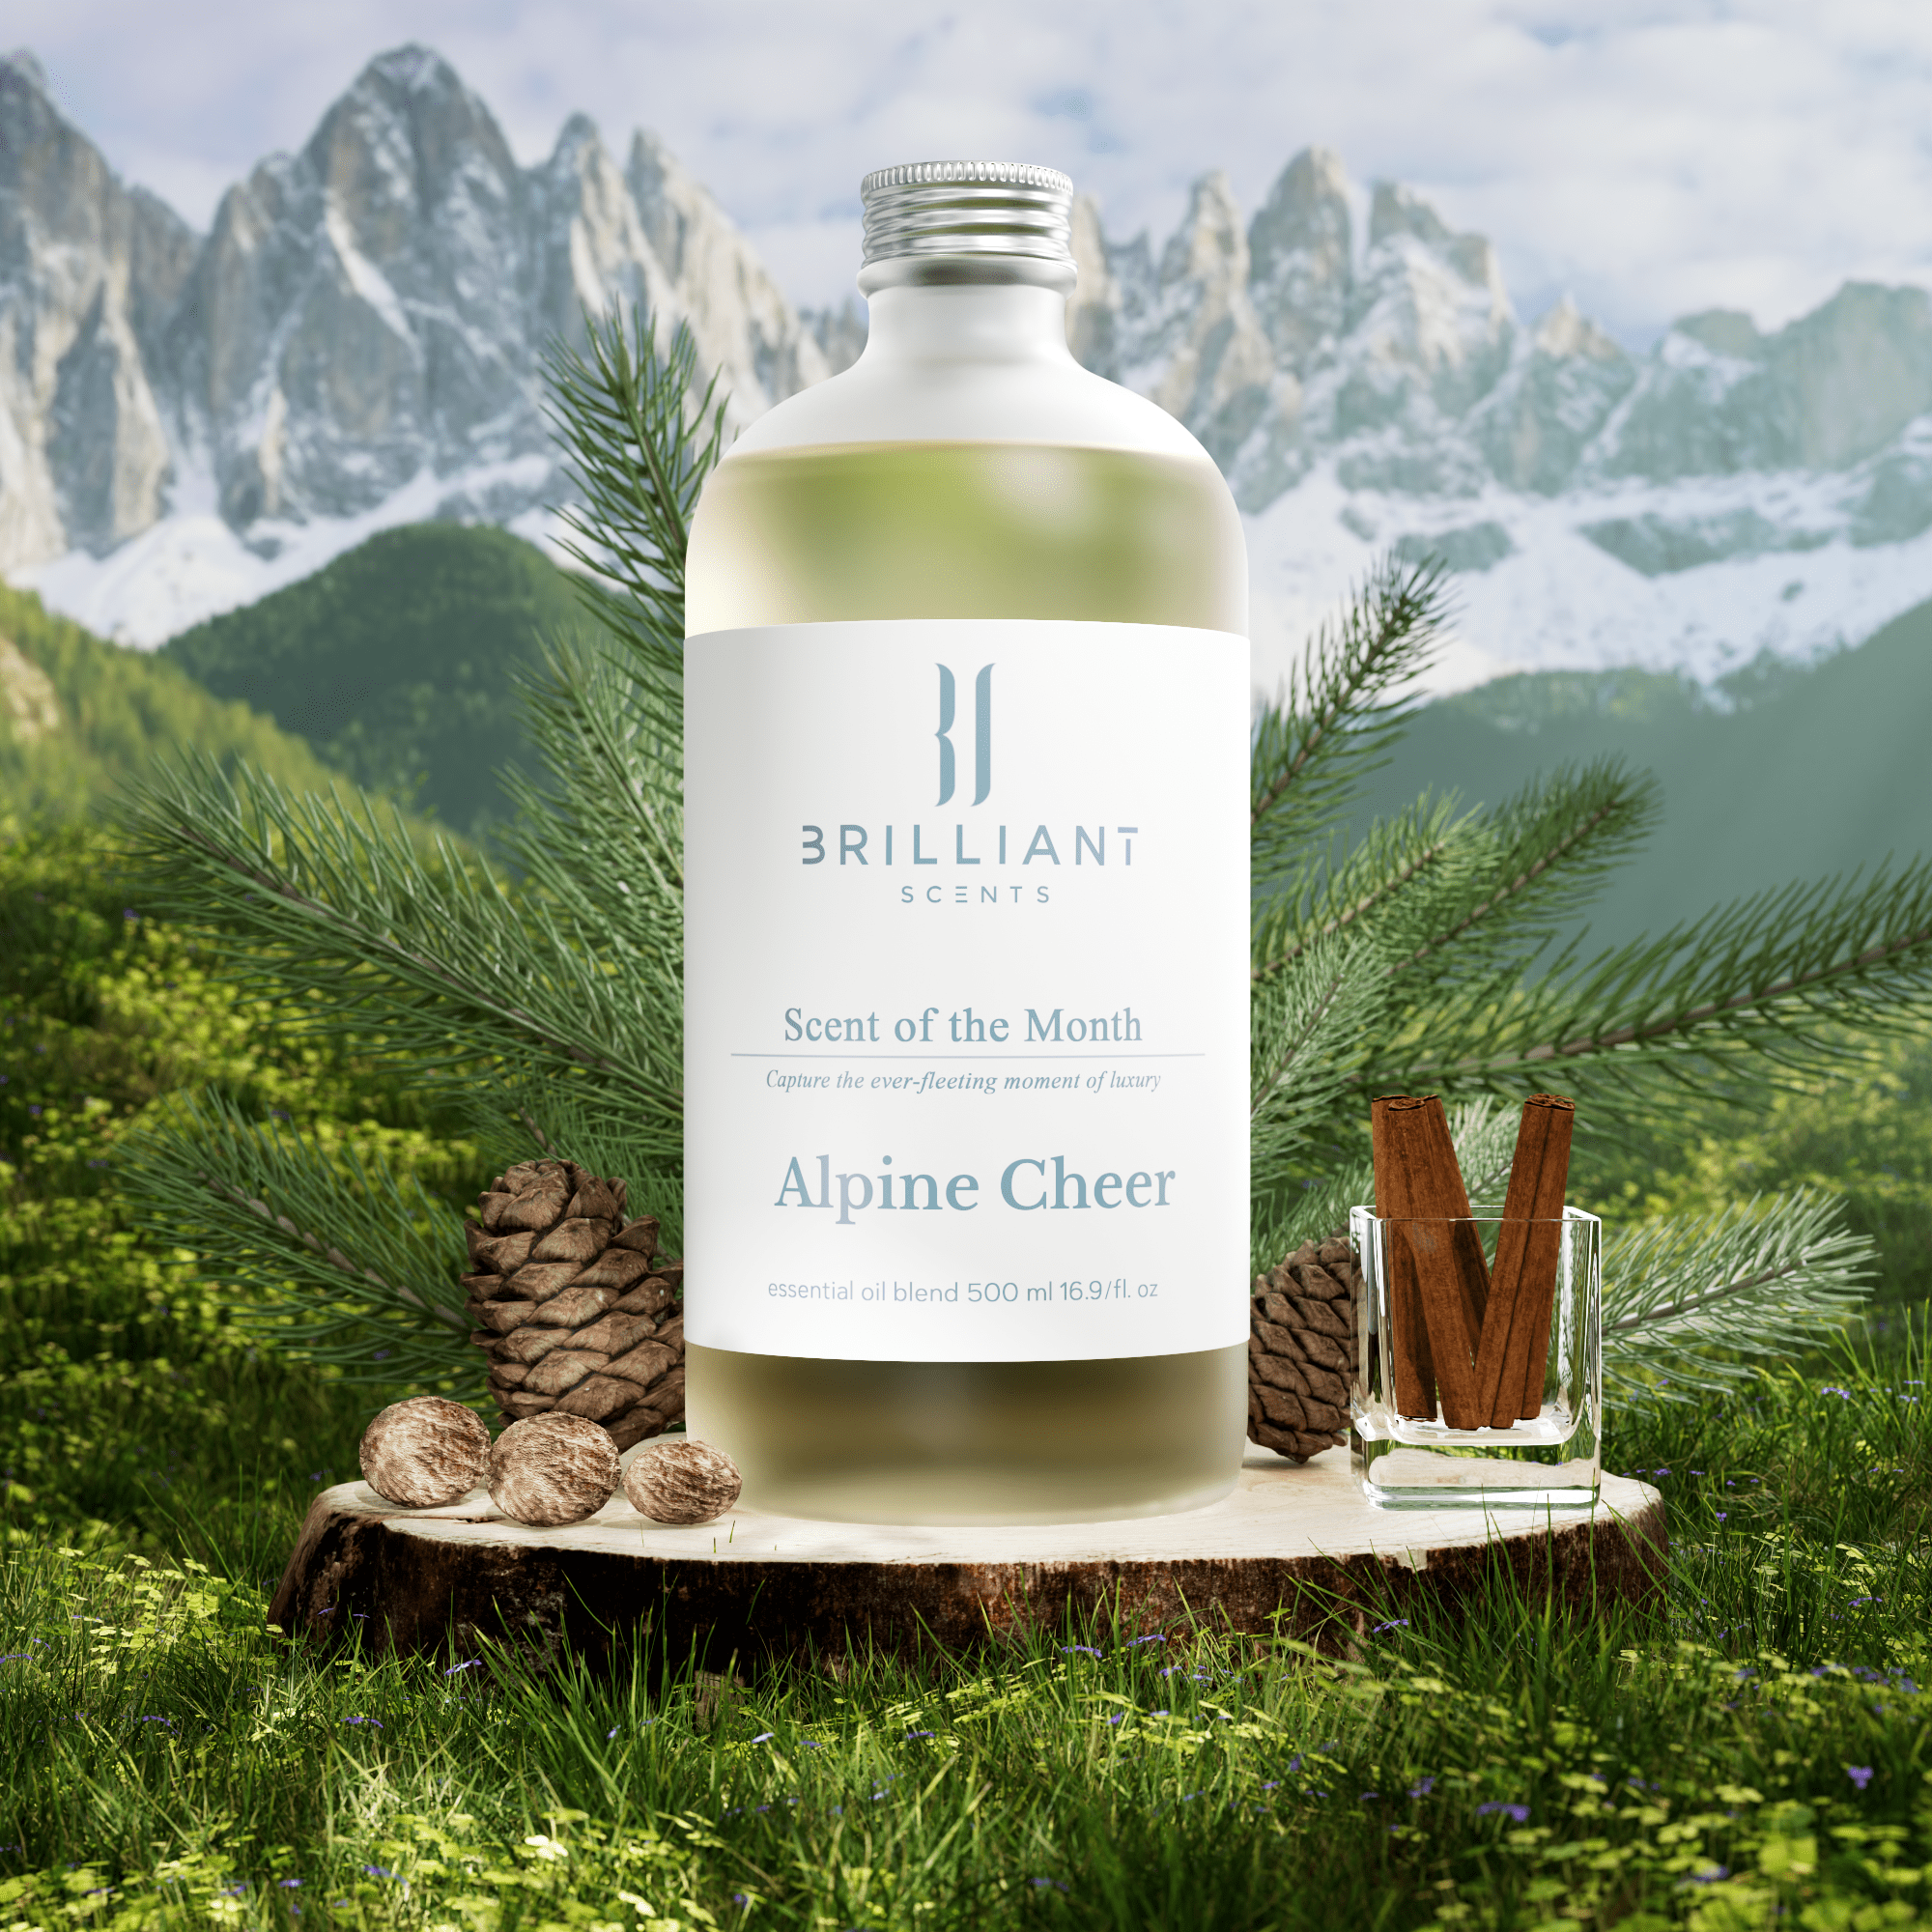 alpine cheer scent brilliant scents